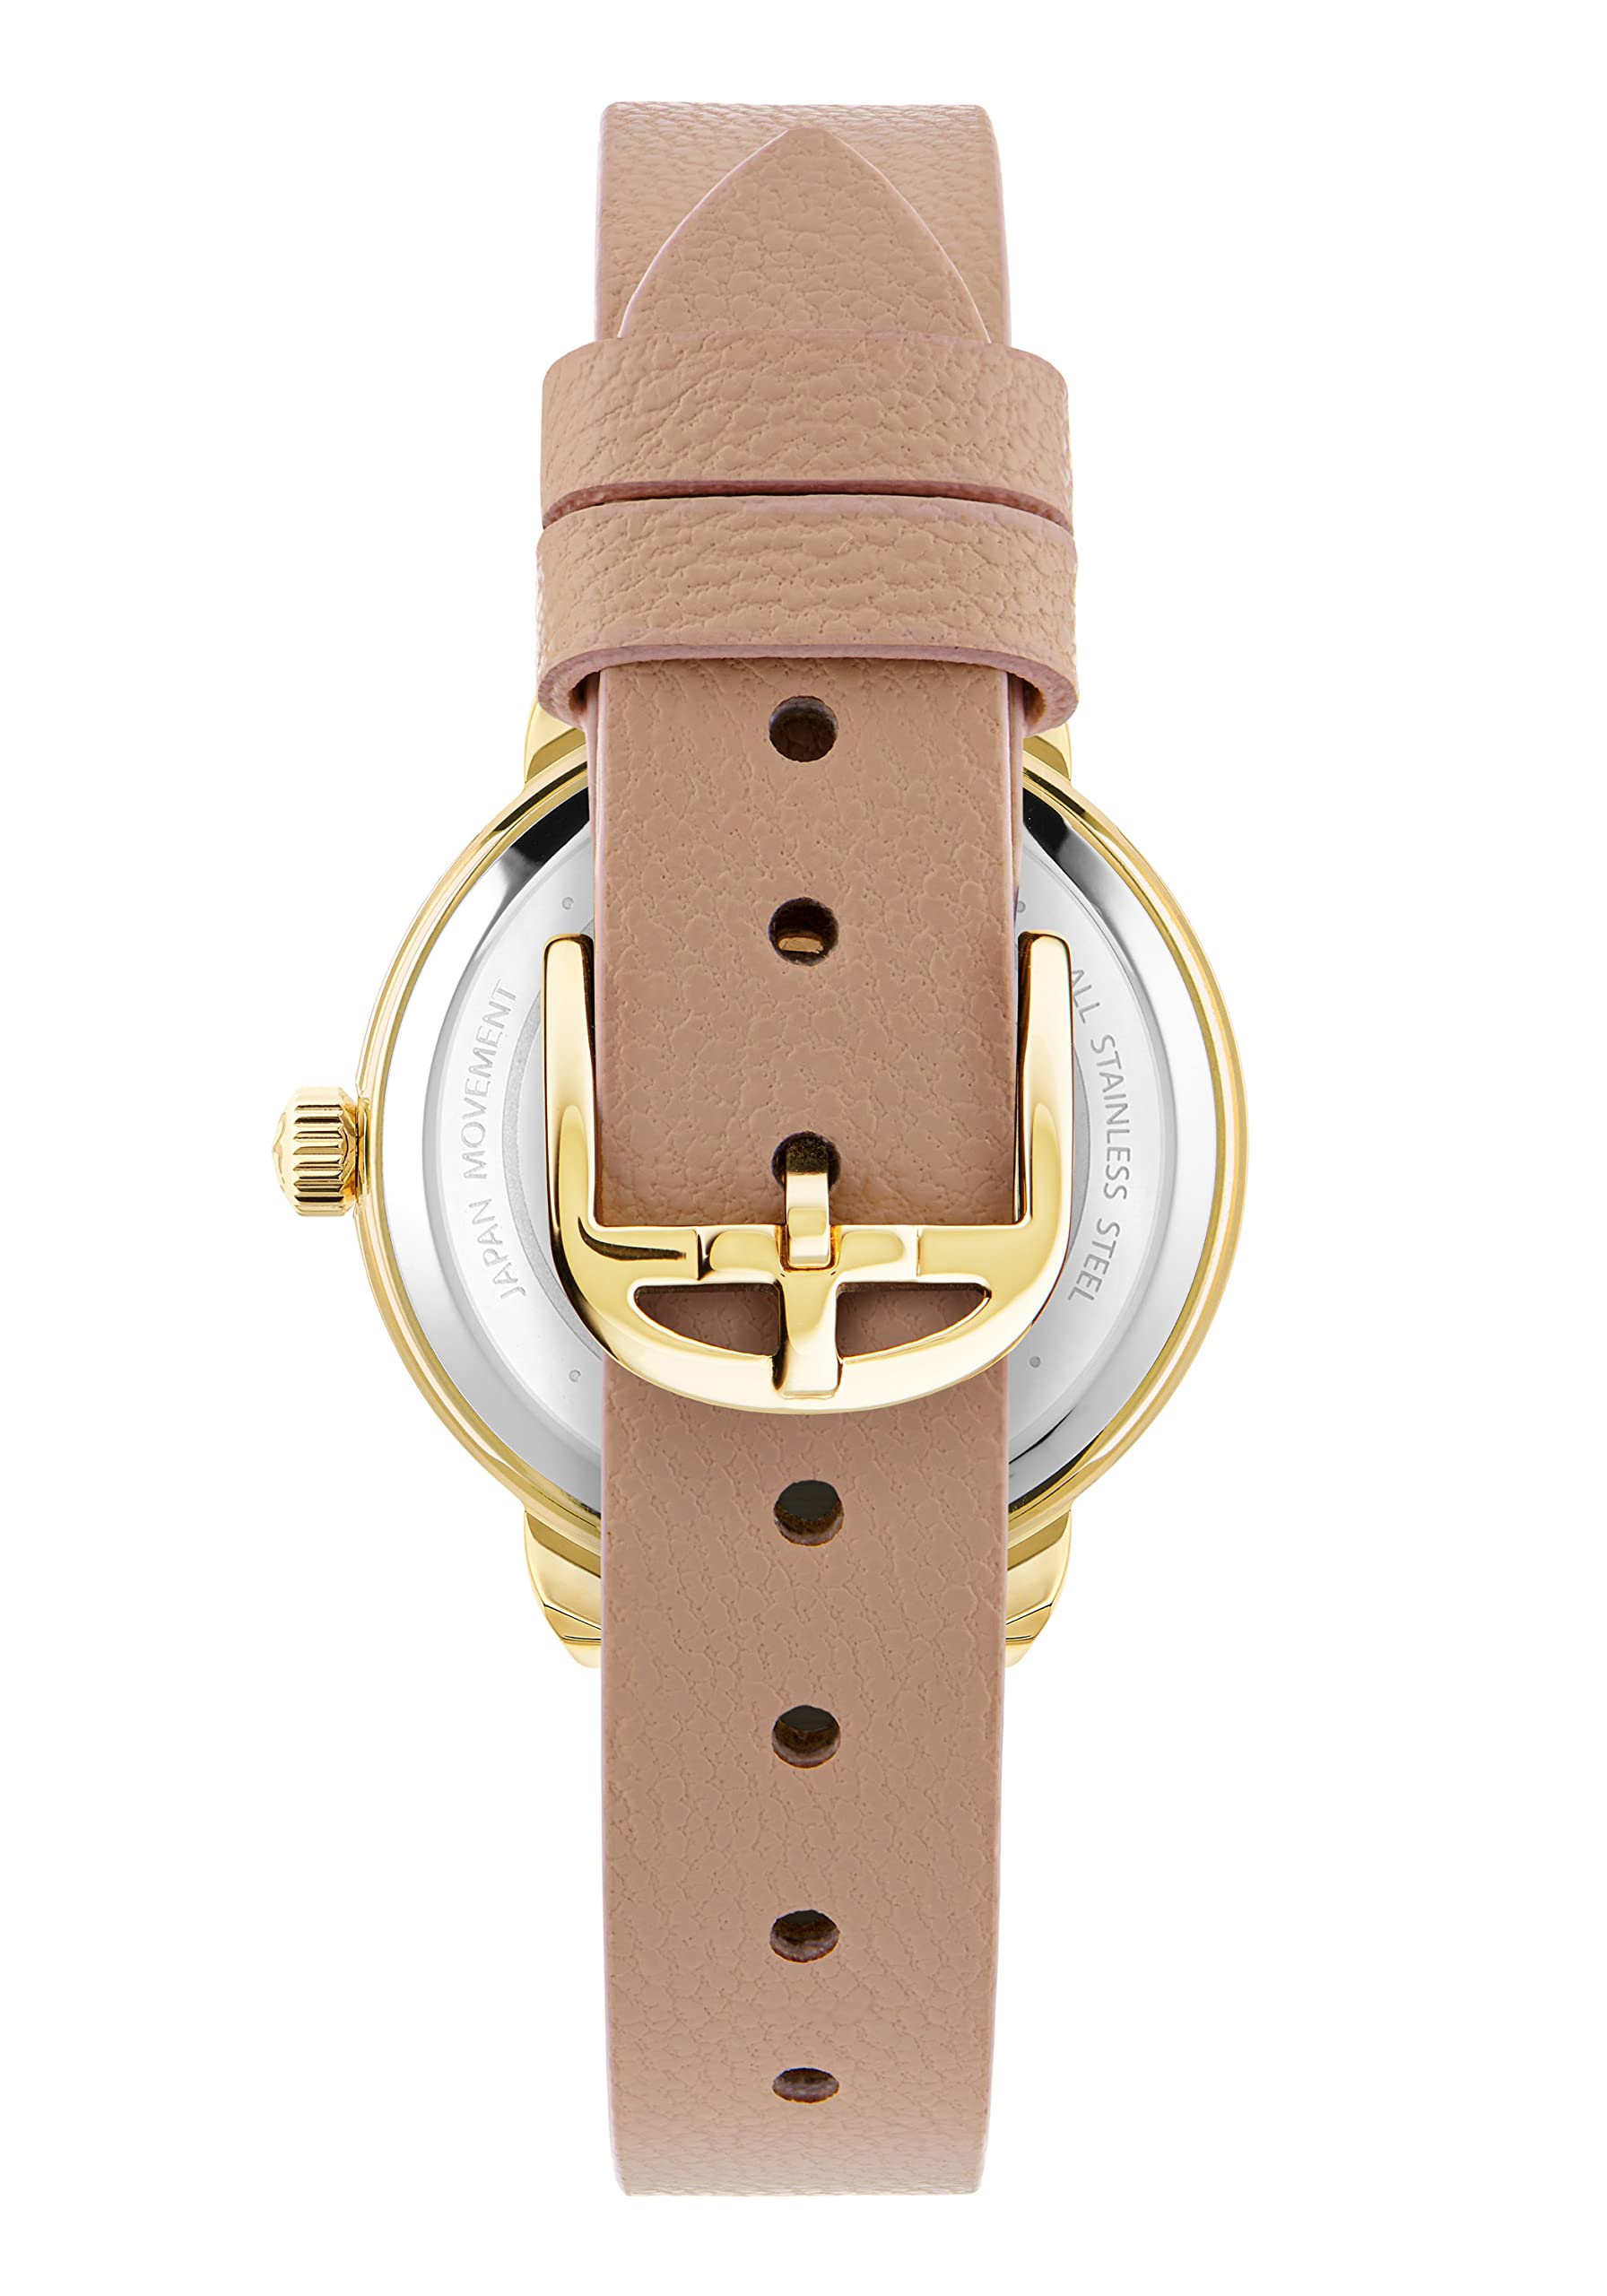 Ted Baker Ladies Light Brown Vegan Leather Strap Watch(Model: BKPFLS3049I)